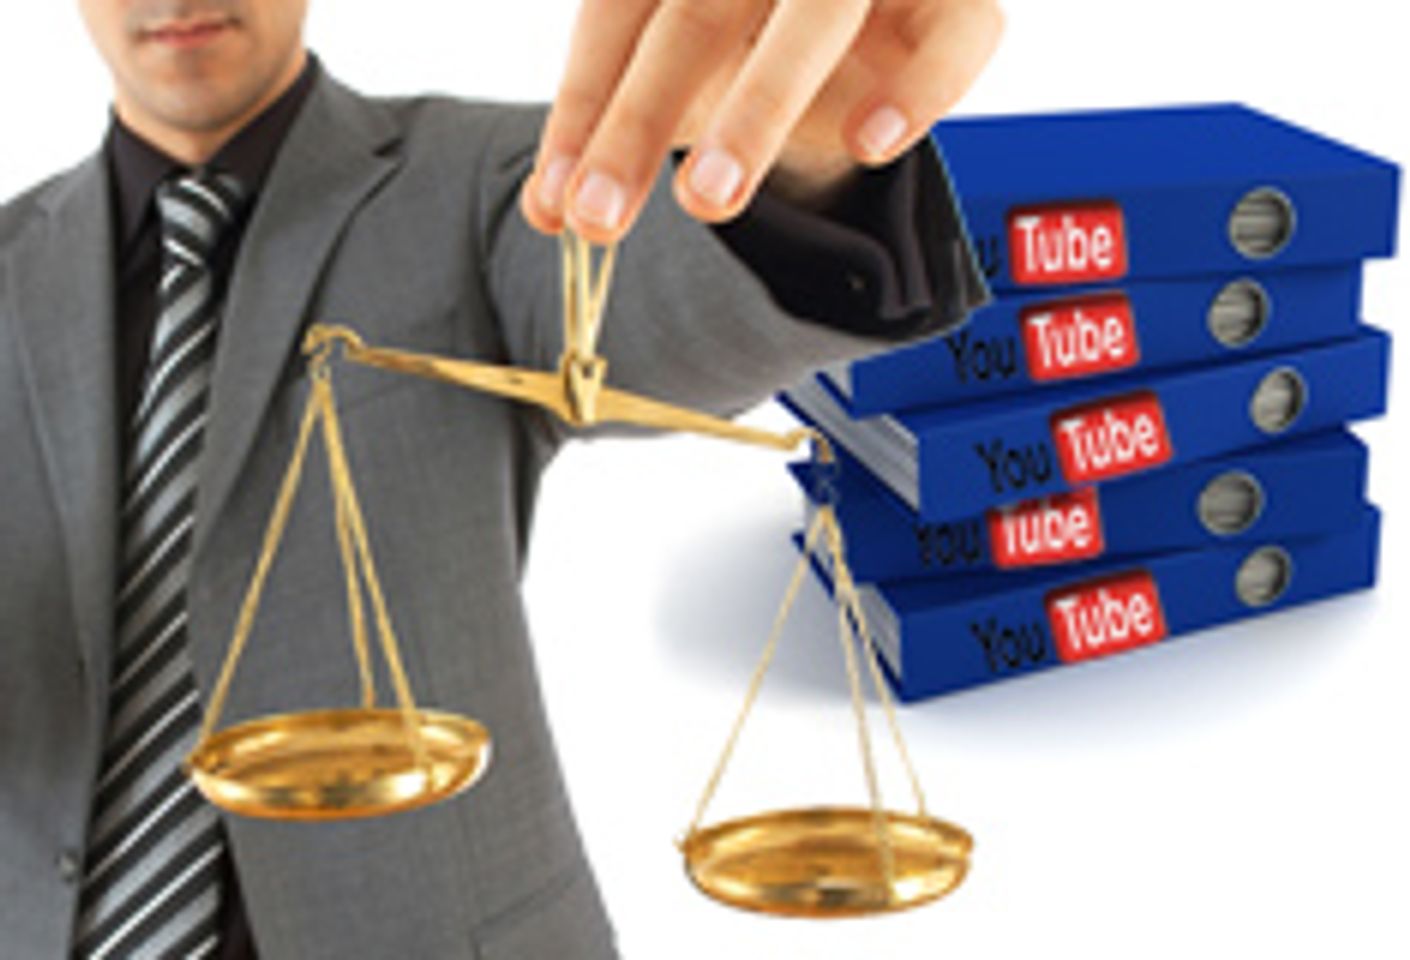 Google, Viacom Clashing Over YouTube Records